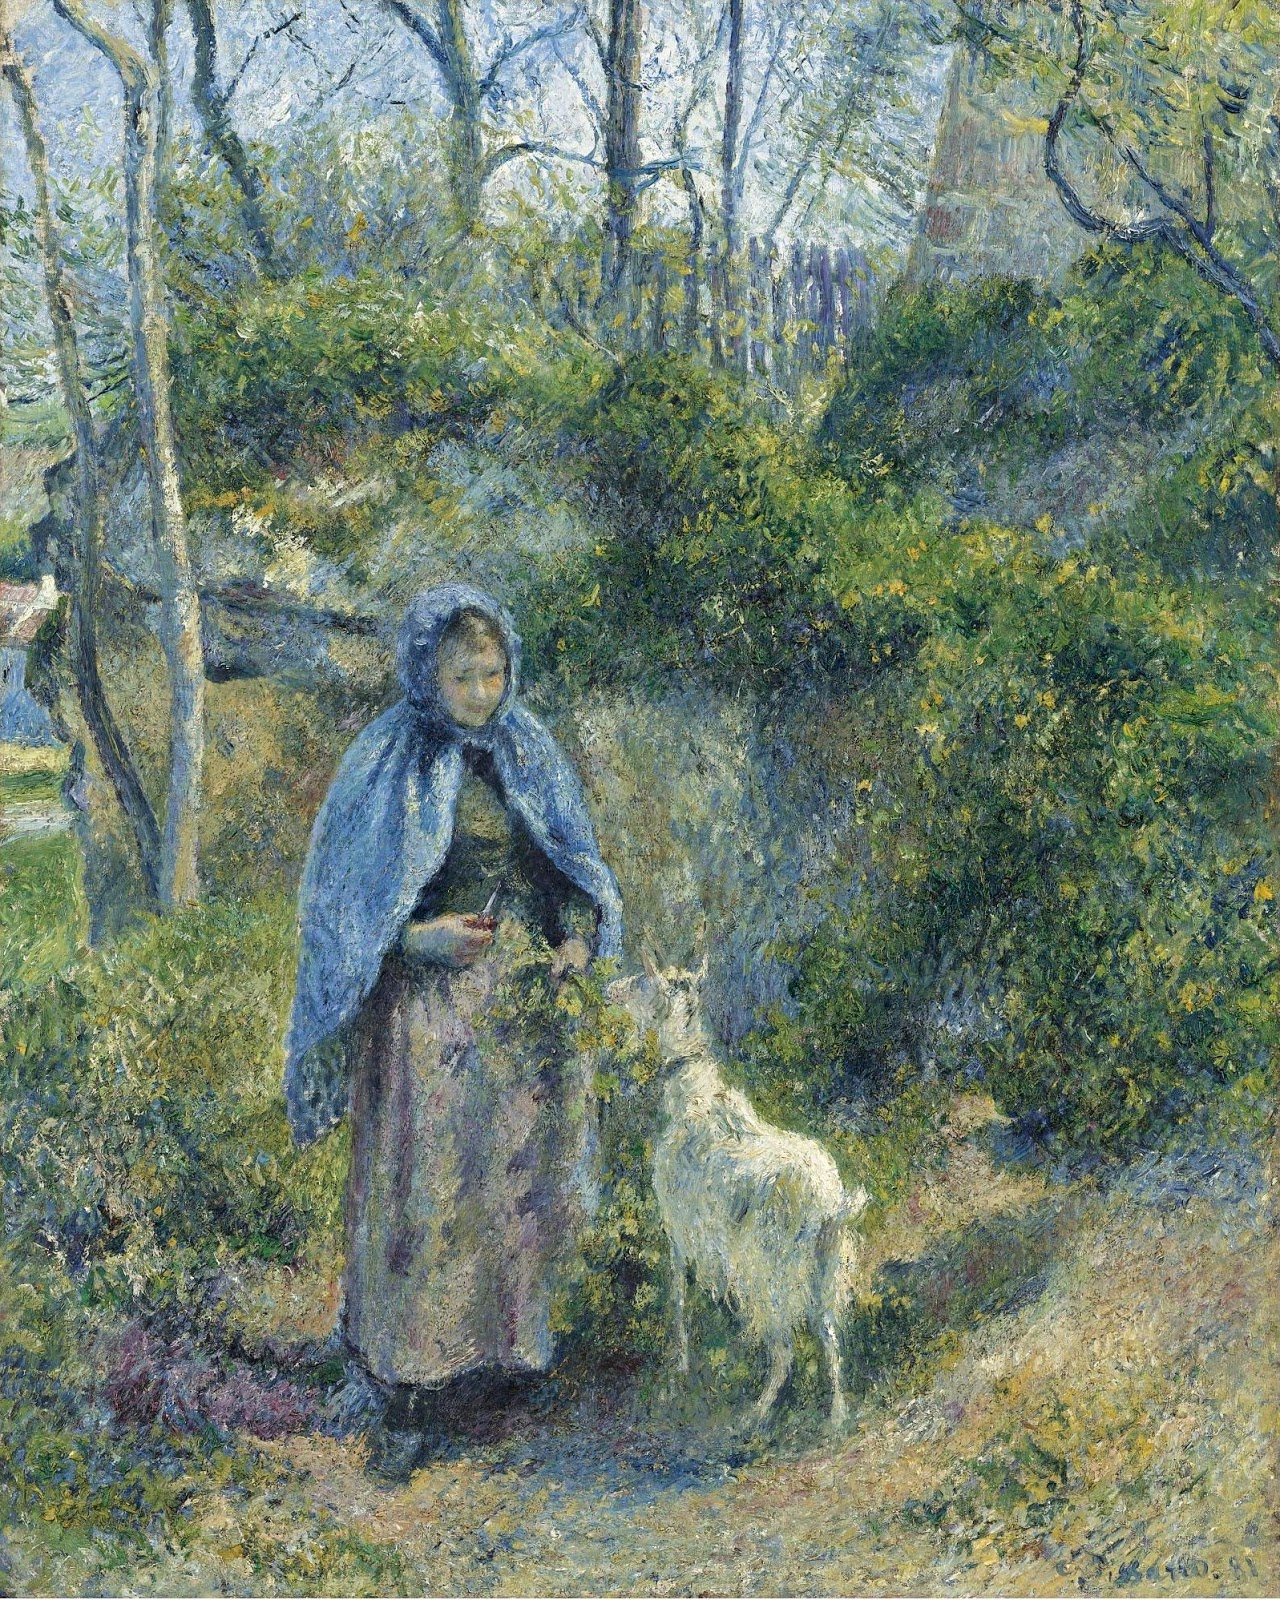 Camille+Pissarro-1830-1903 (433).jpg